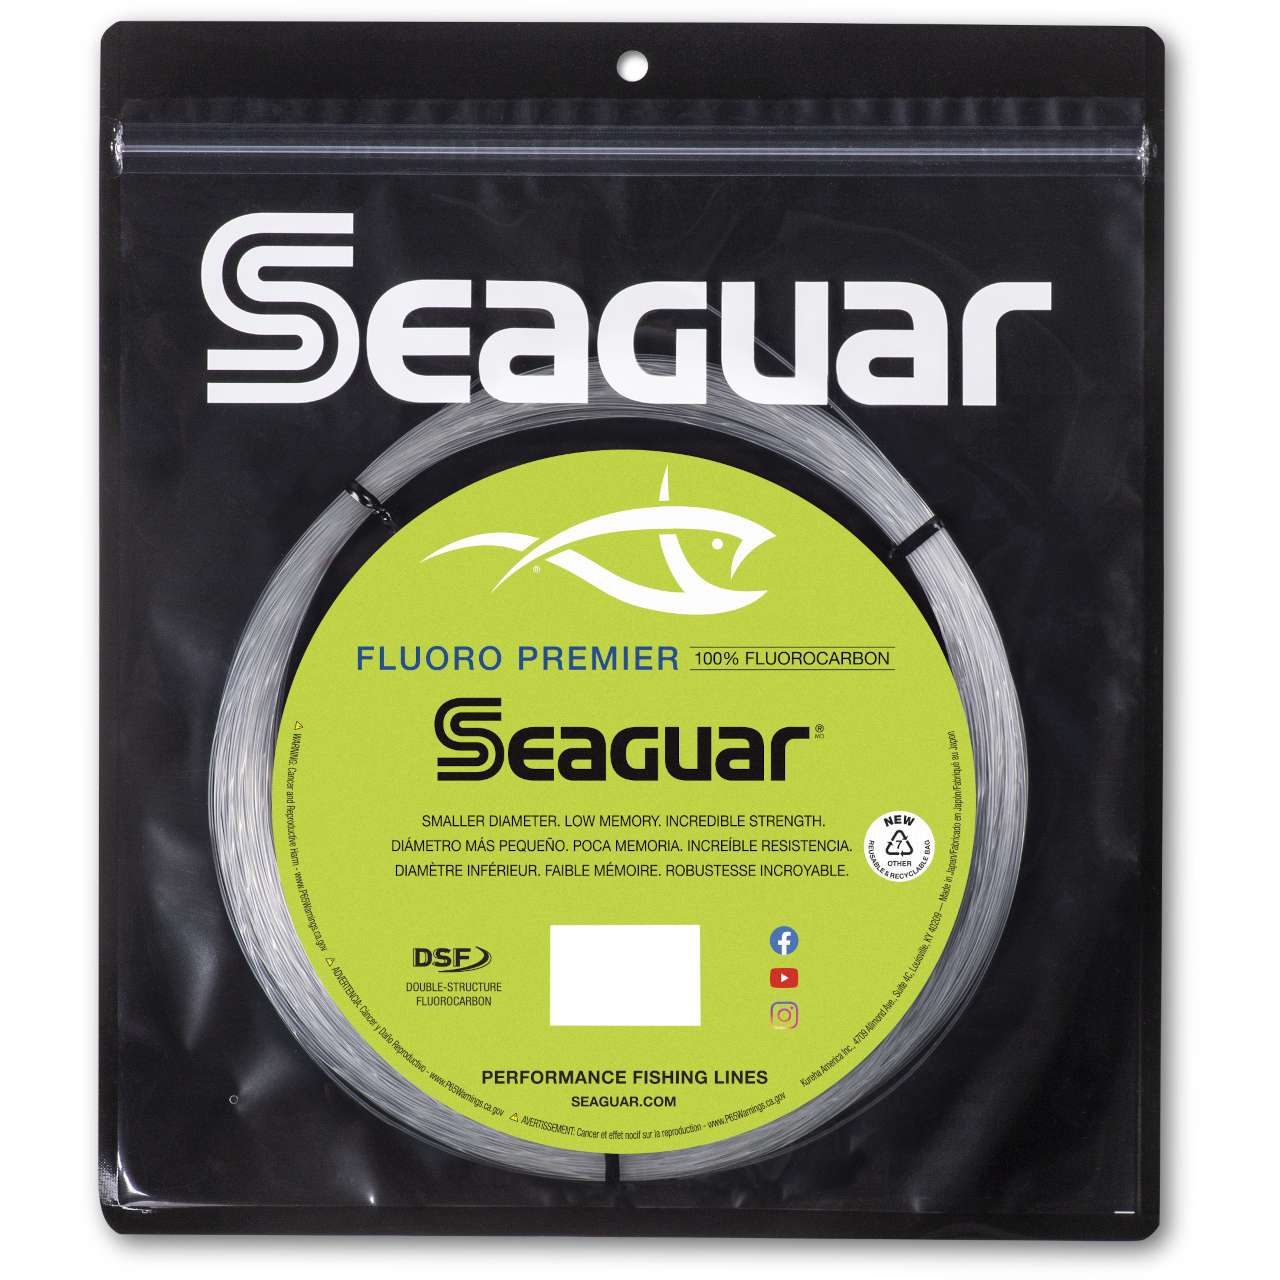 Seaguar Gold Label Fluorocarbon Leader Wheel 50 Yards — Discount Tackle